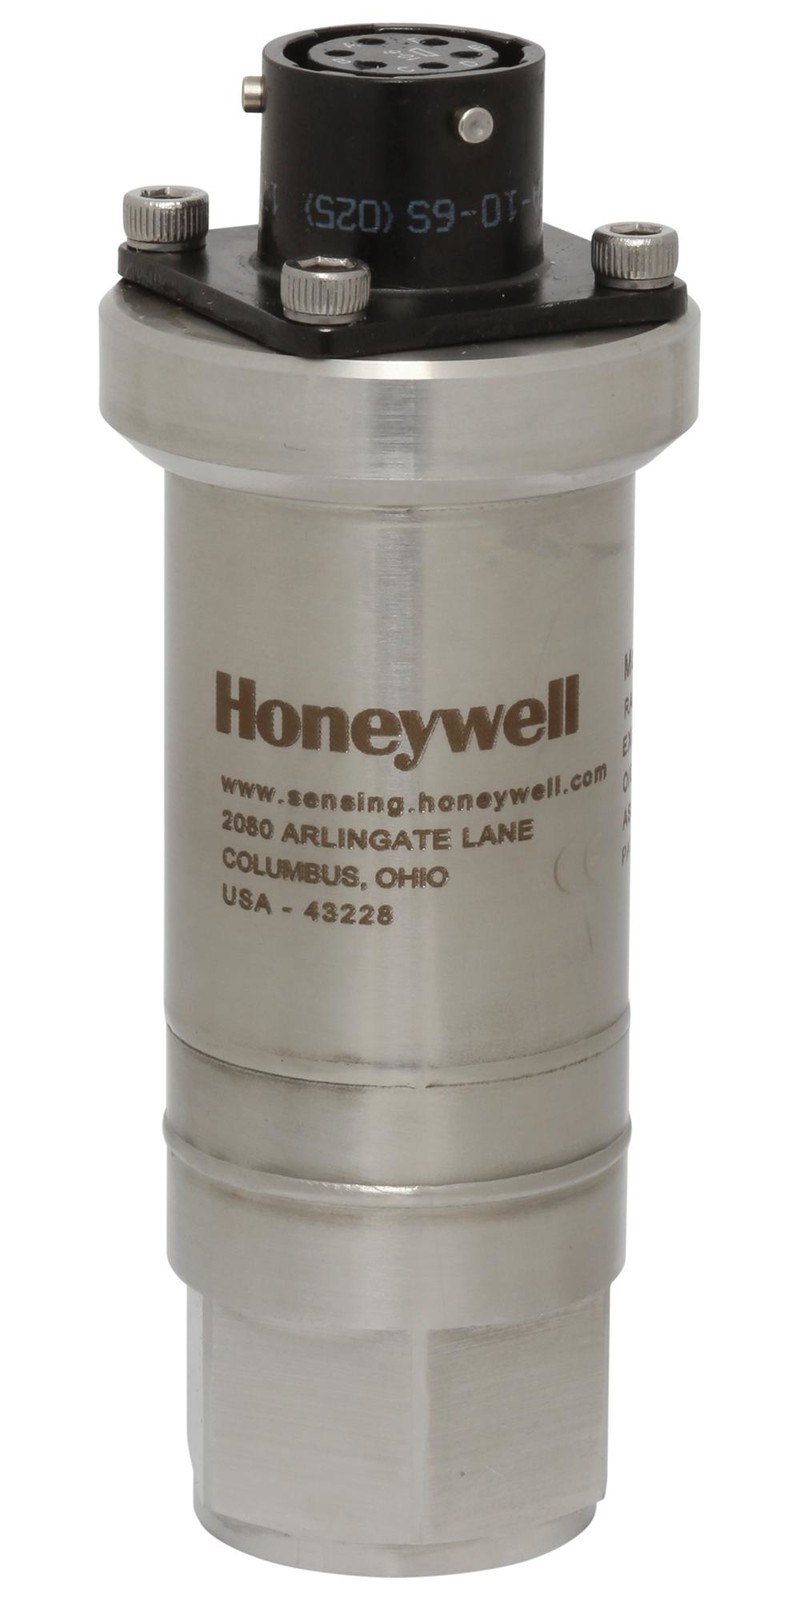 Honeywell 060-T205-01 Press Transducer, 1000Psi, Gauge, Current